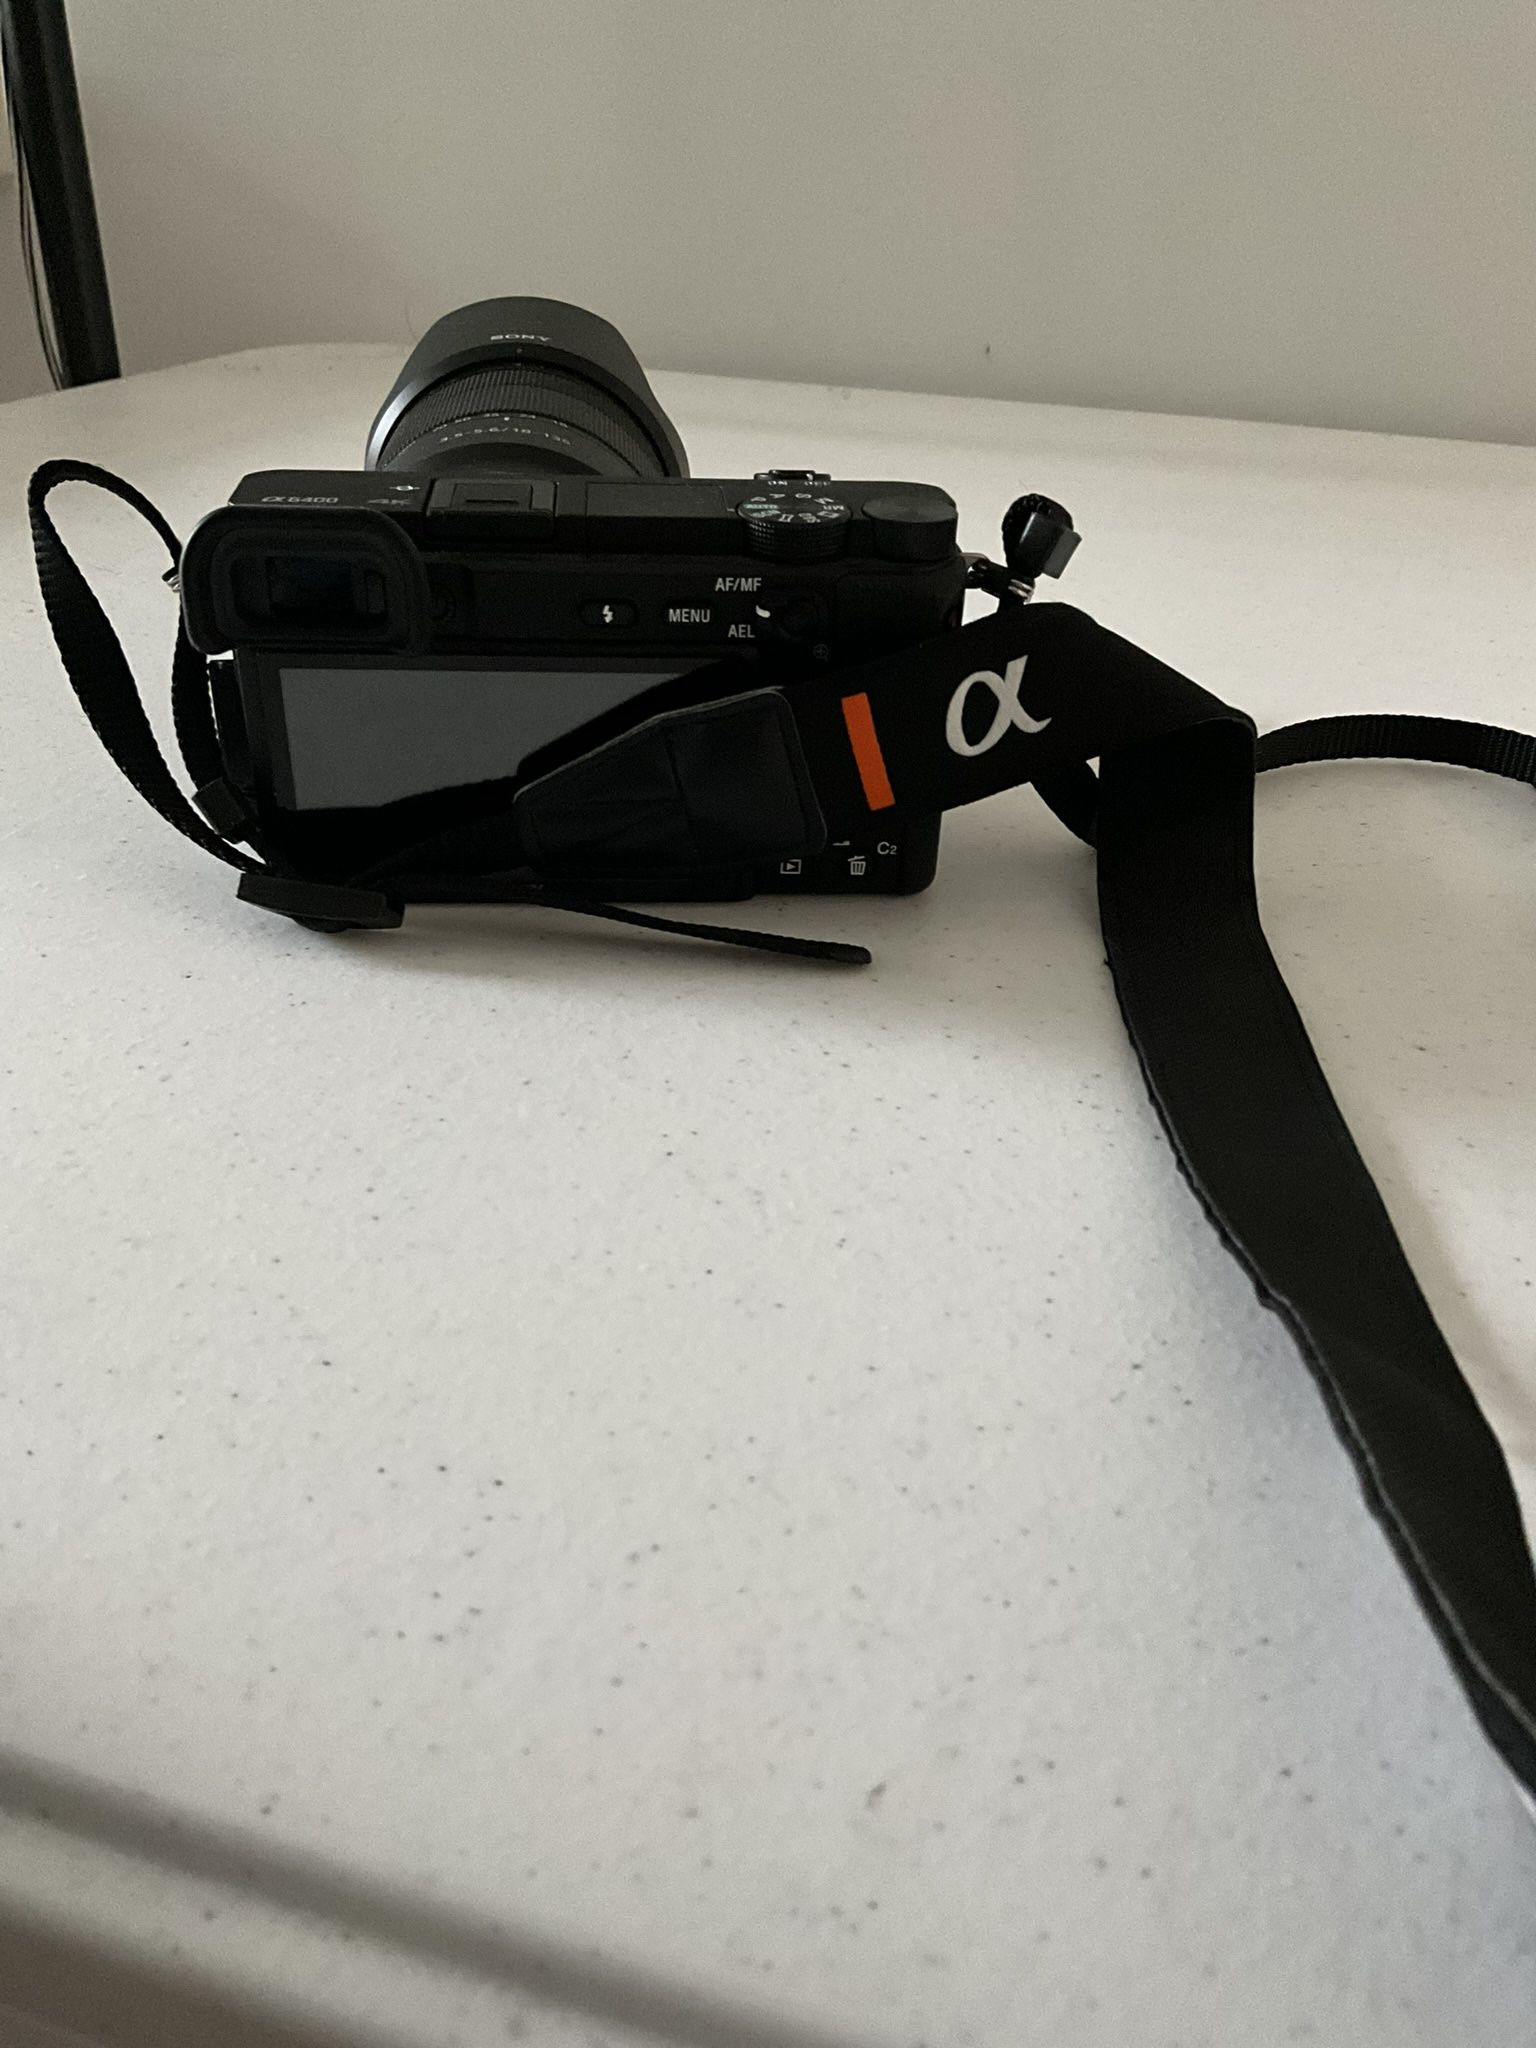 Sony Alpha A6400 Mirrorless 4k Video Camera With E18-135mm f3.5-5.6 OSS Lens - Black